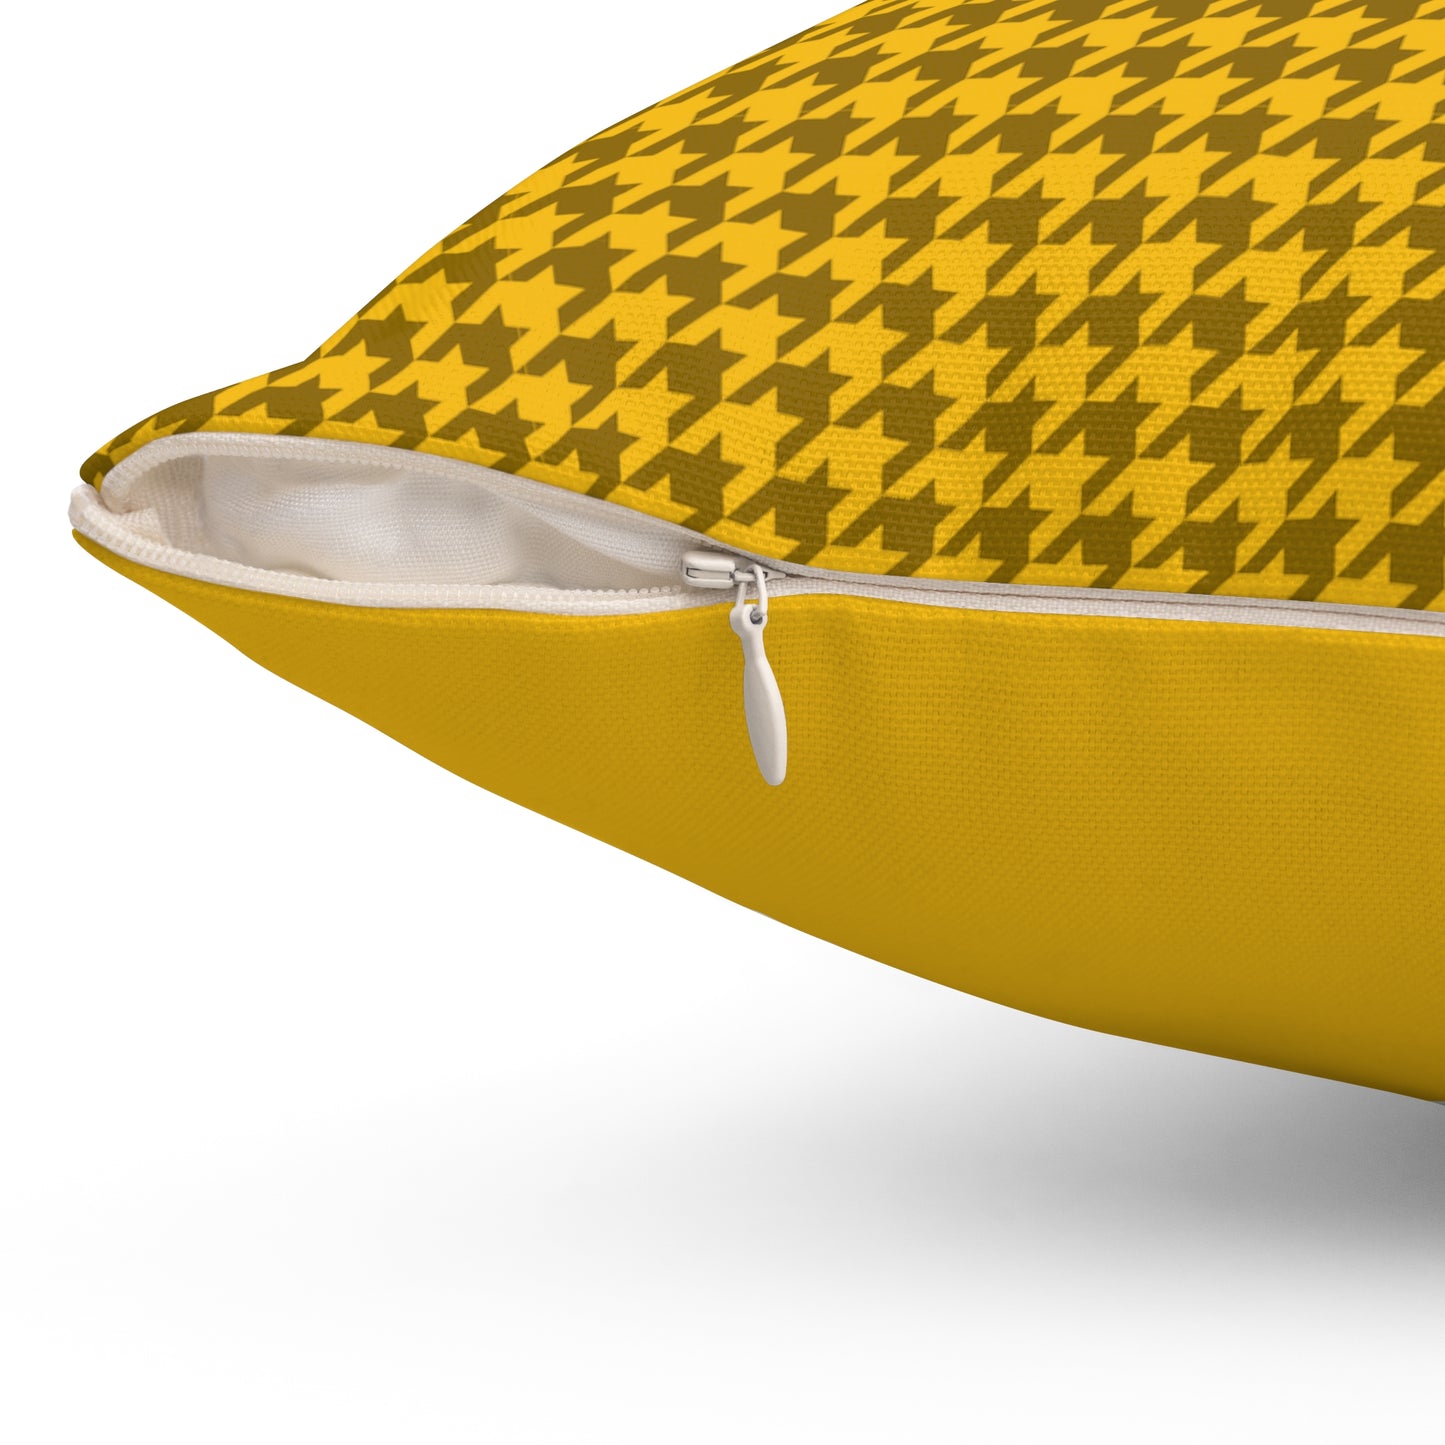 Pillow - Freedom Pattern - Spun Polyester